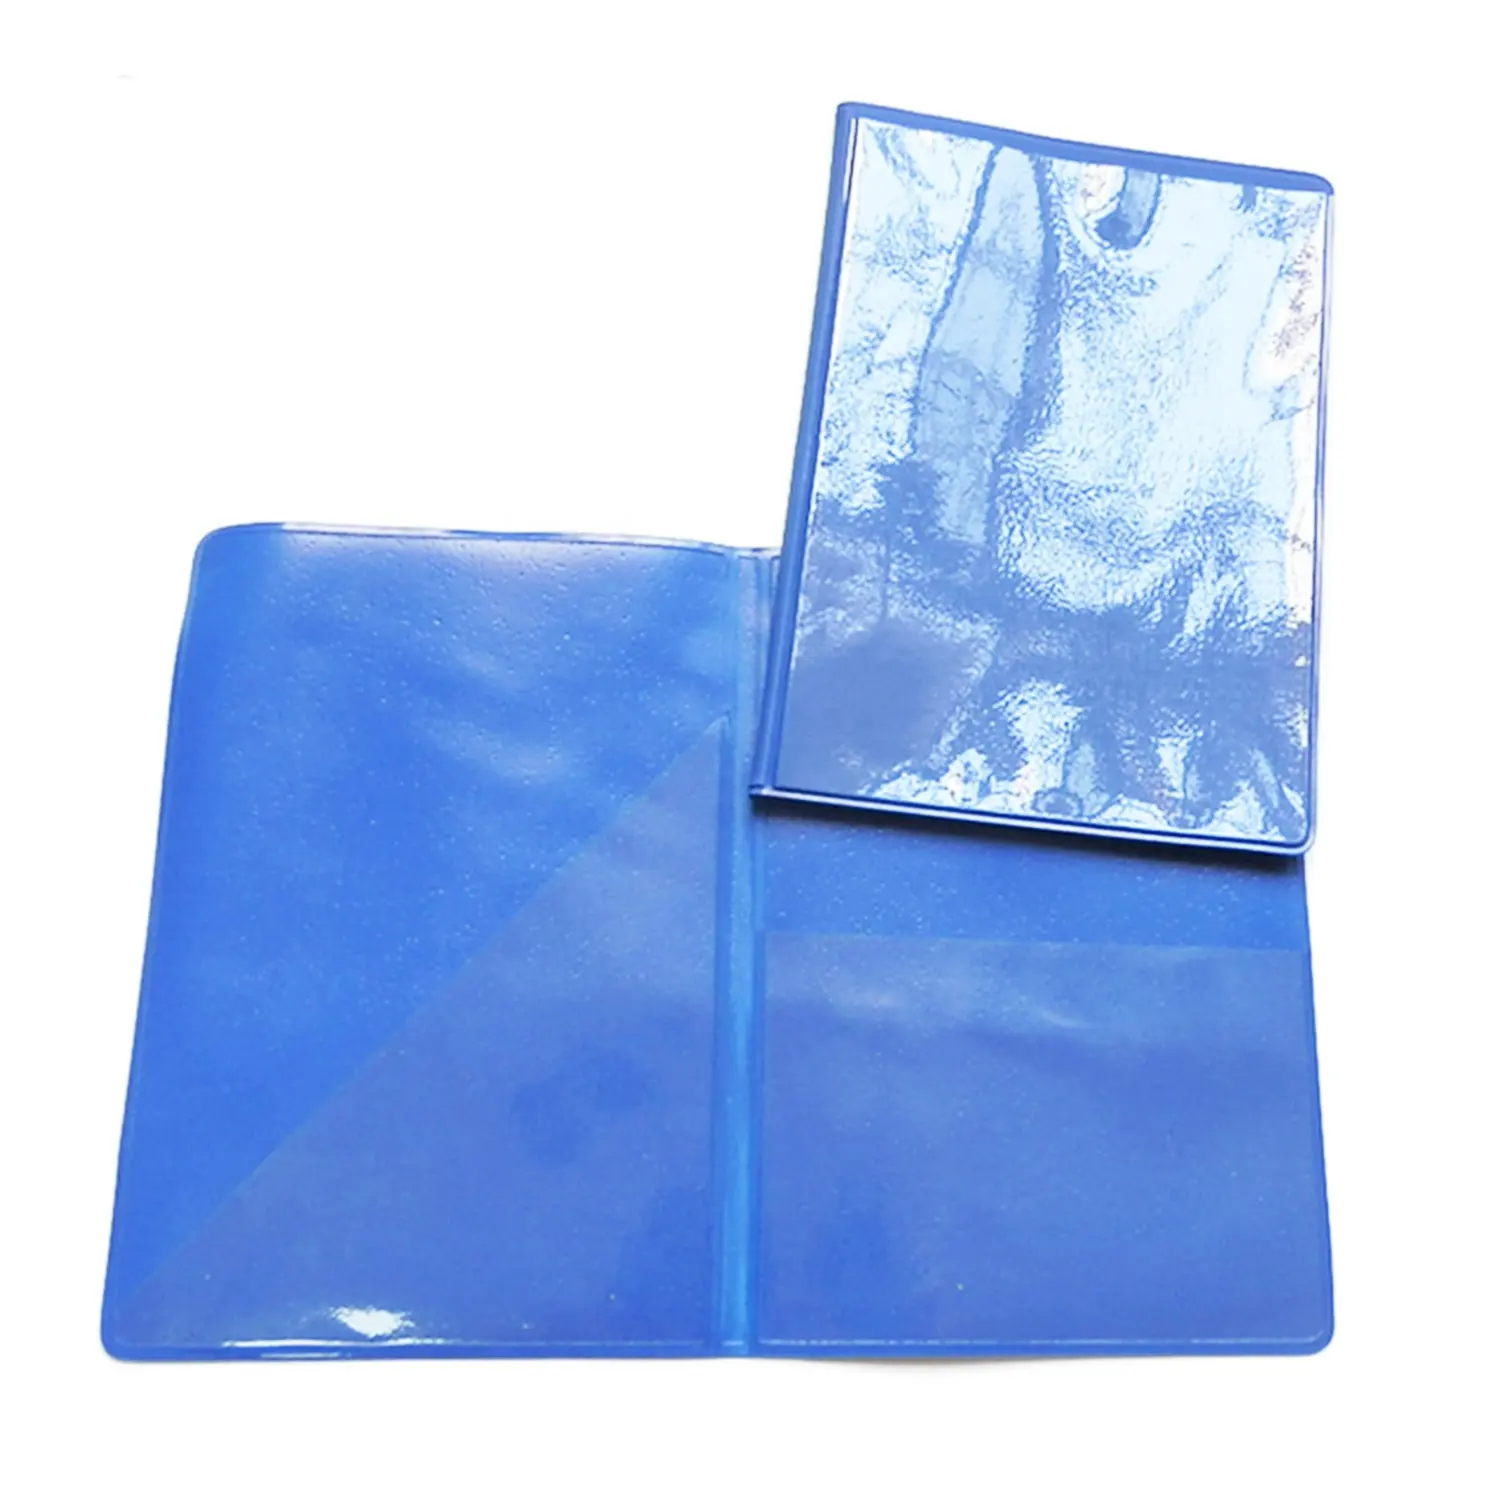 Personalizado a4 ou a5 plástico azul documento pasta carro manual pasta macio certificado titular arquivo pastas